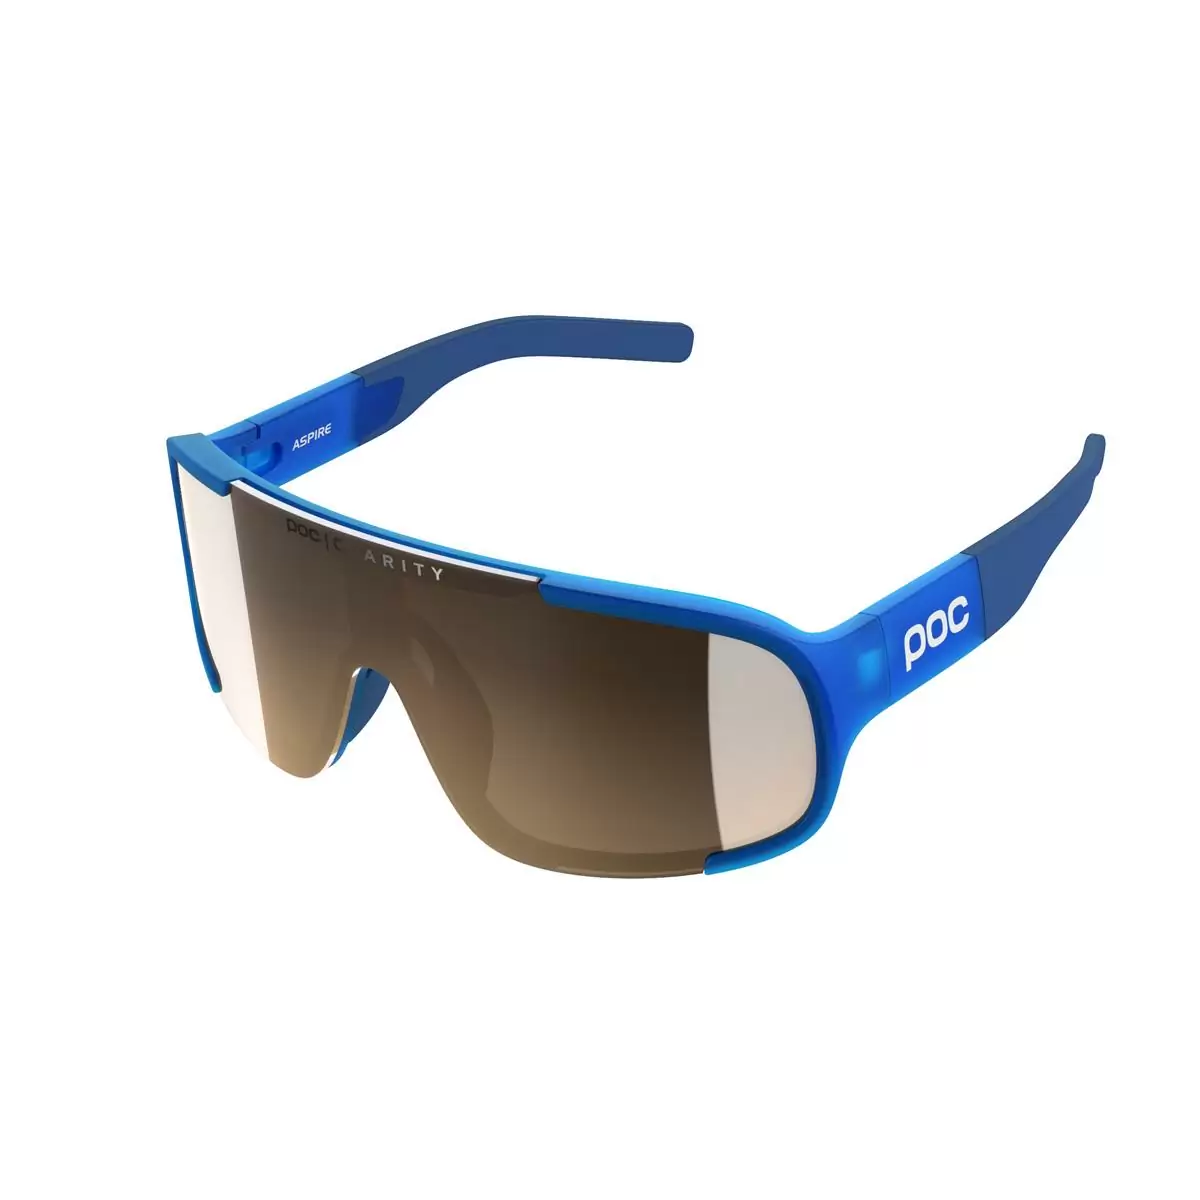 Aspire Sunglasses Opal Blue Translucent Lens Brown/Silver Mirror - image